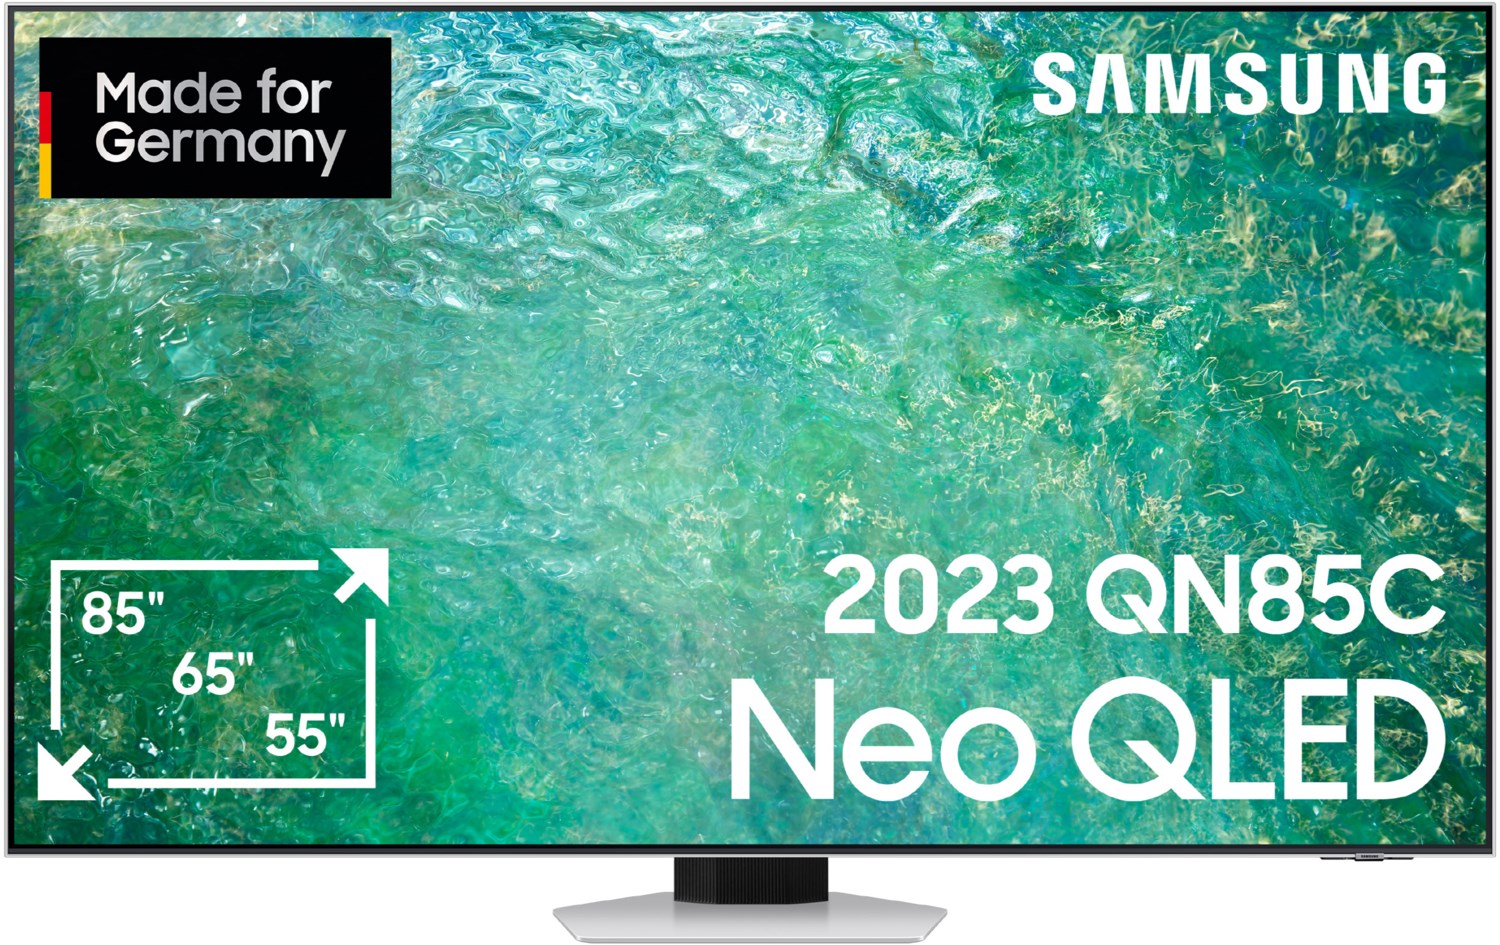 Samsung Neo QLED-TV 75 Zoll (189 cm) carbon silber